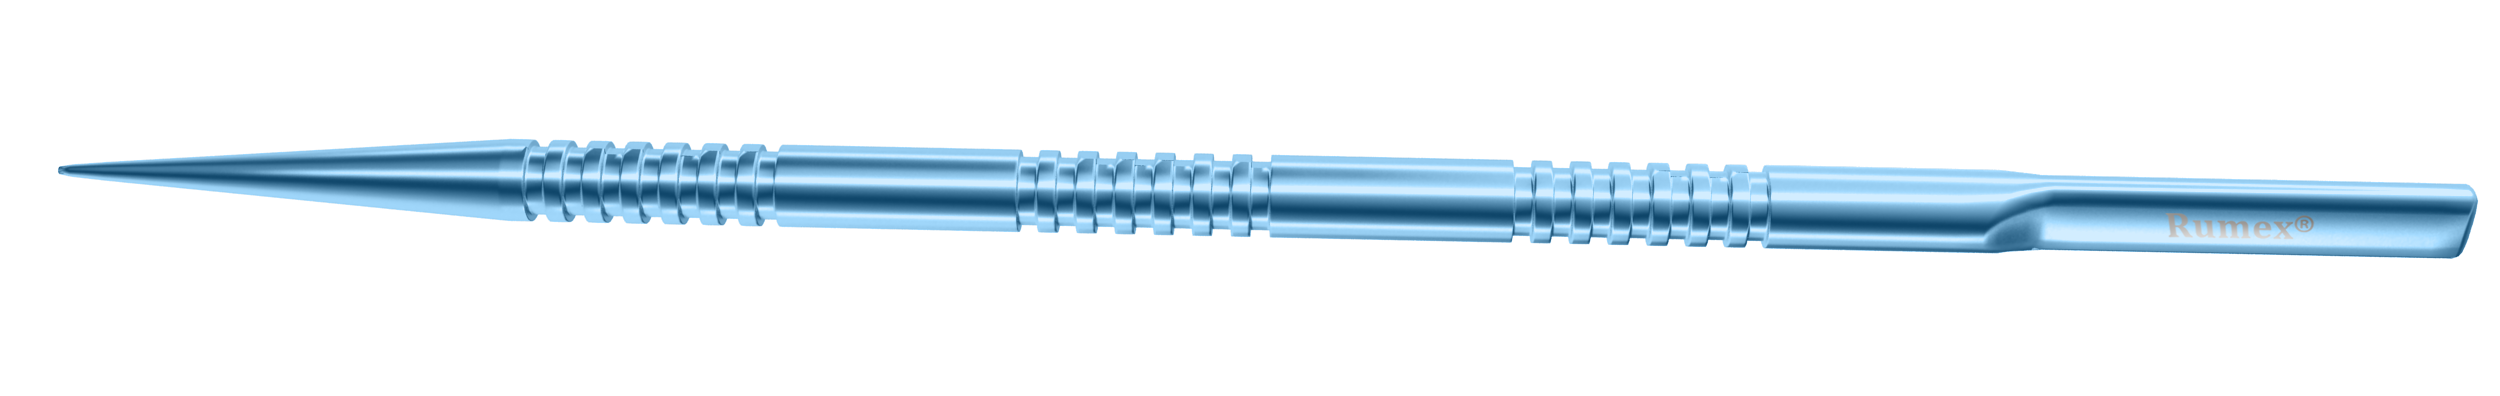 758R 9-052T Wilder Lacrimal Dilator, Size 3, 32.00 mm Taper, Length 100 mm, Titanium